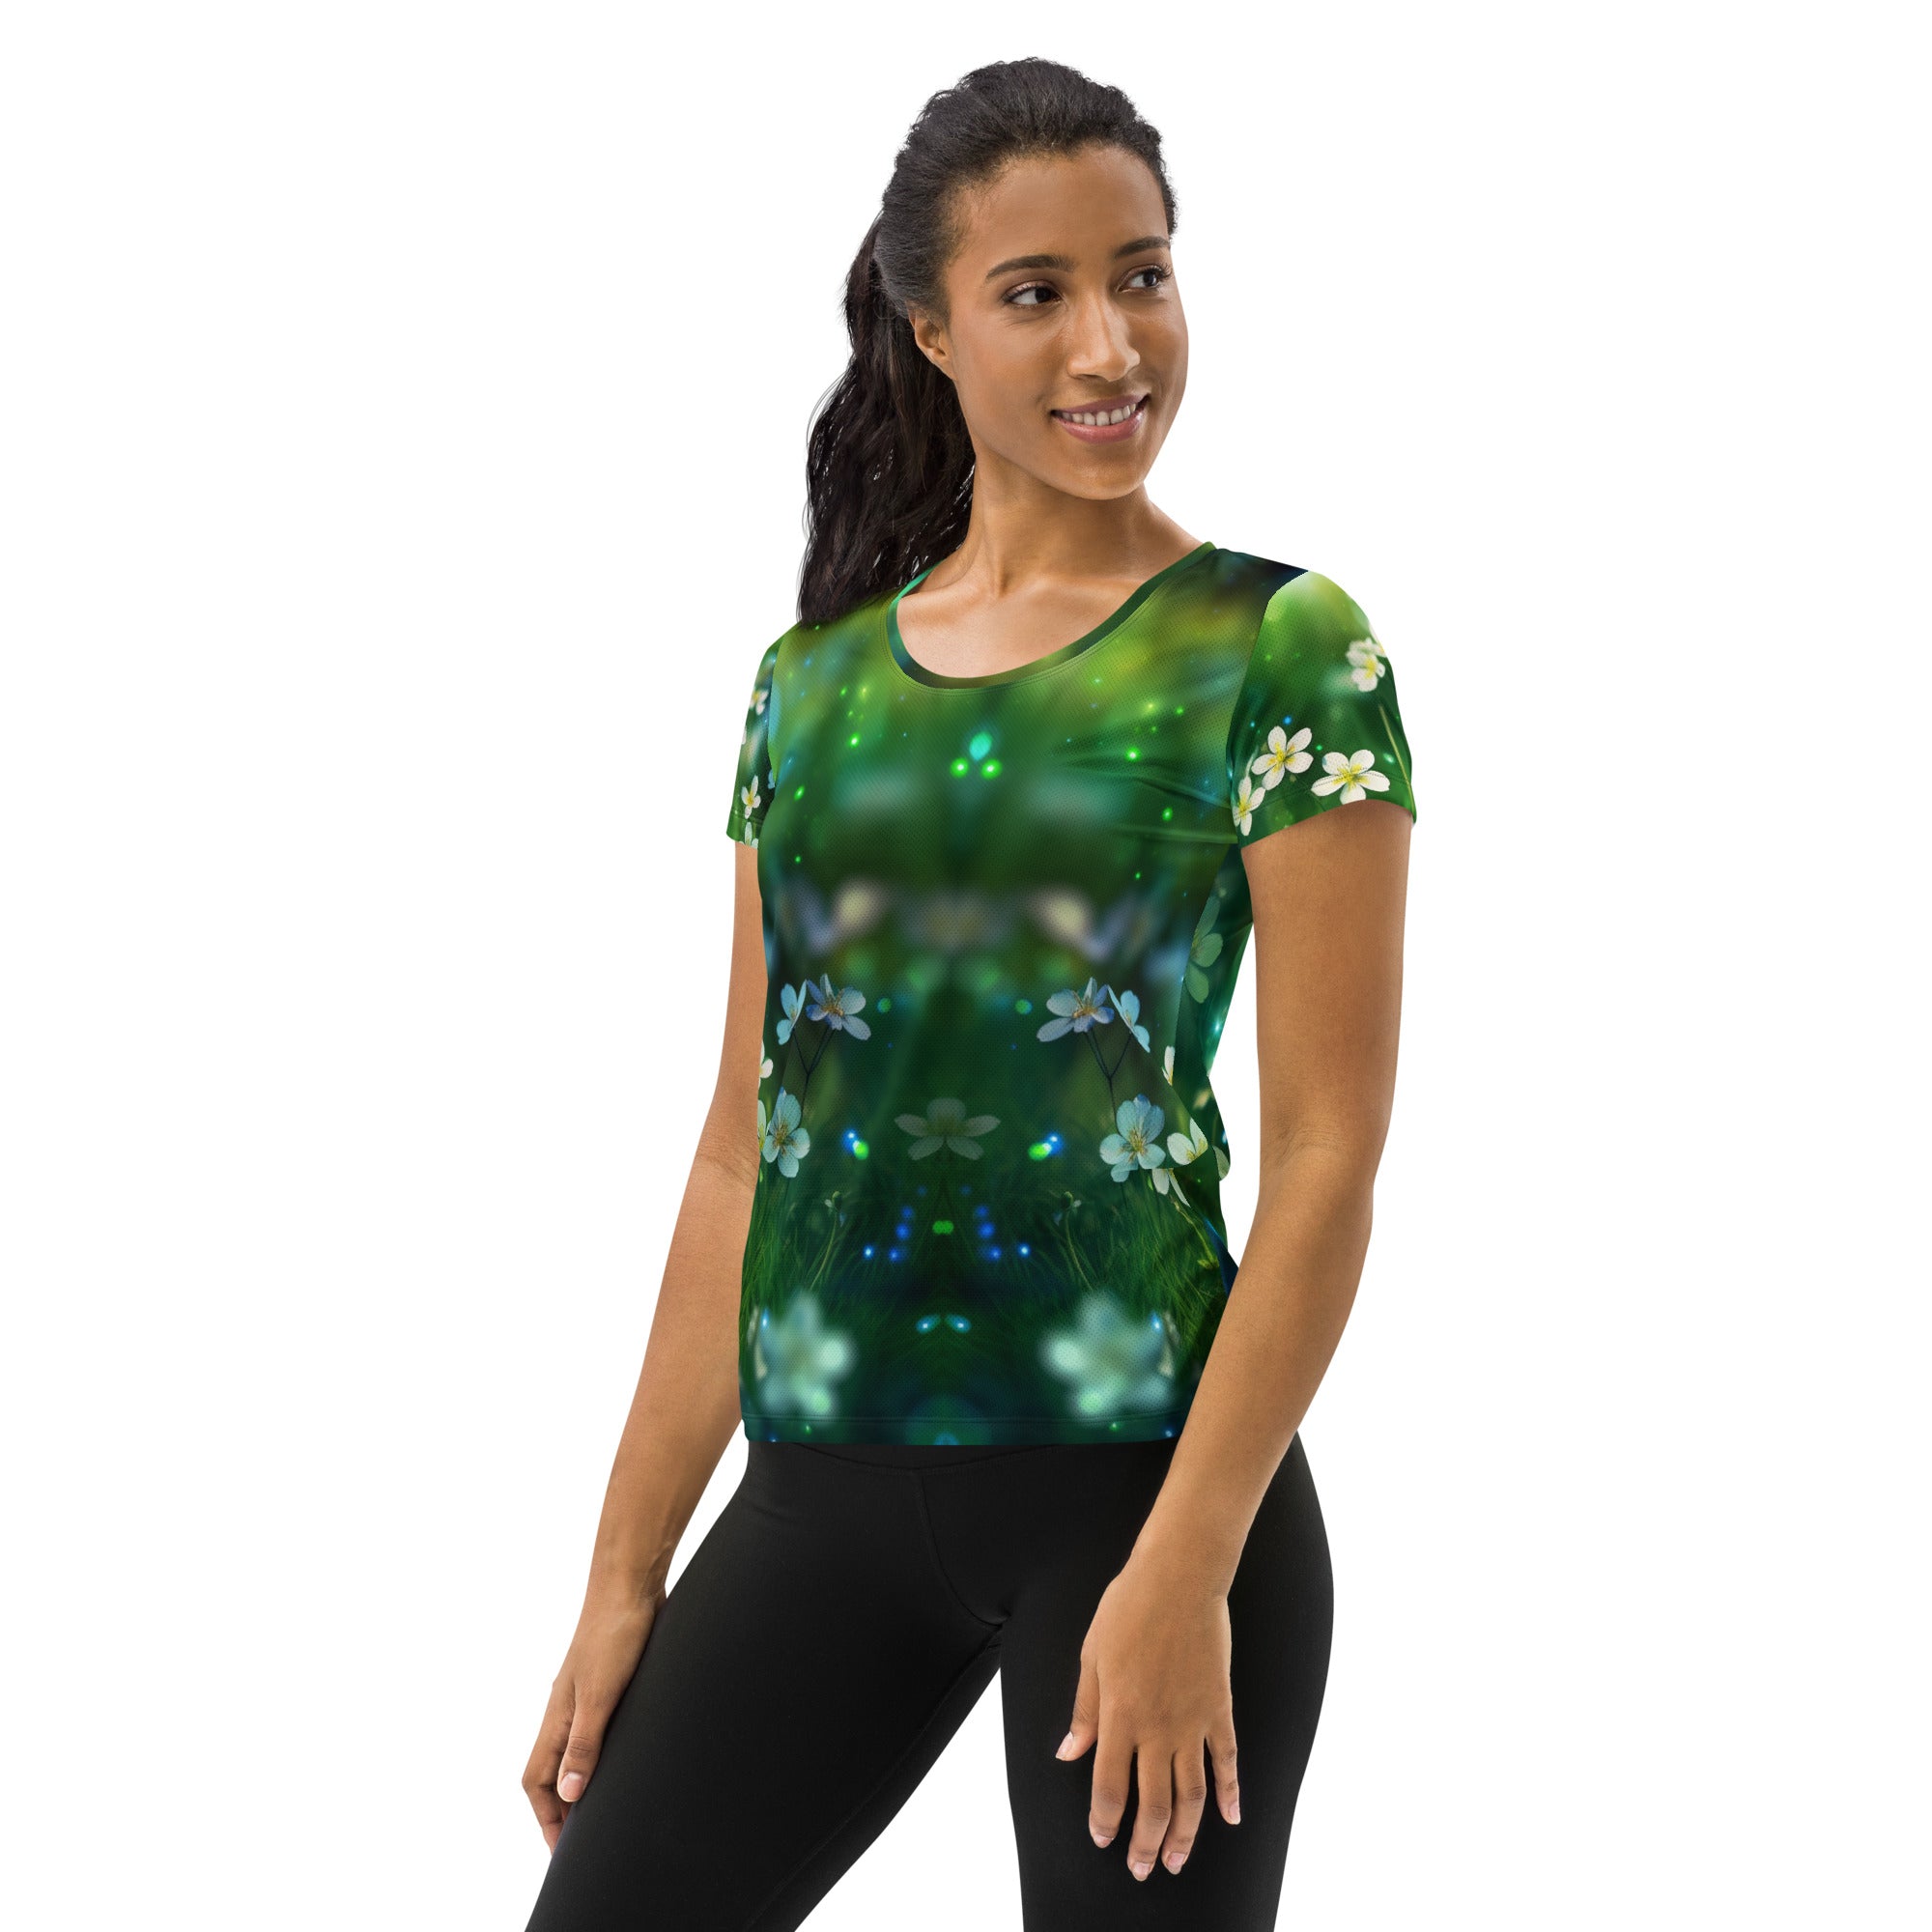 Light Green Sparkling Athletic Tee for Girls and Women | Workout Shirt | Training T-Shirt | Girl Running Tee | Gym Shirt | Exercise Shirt